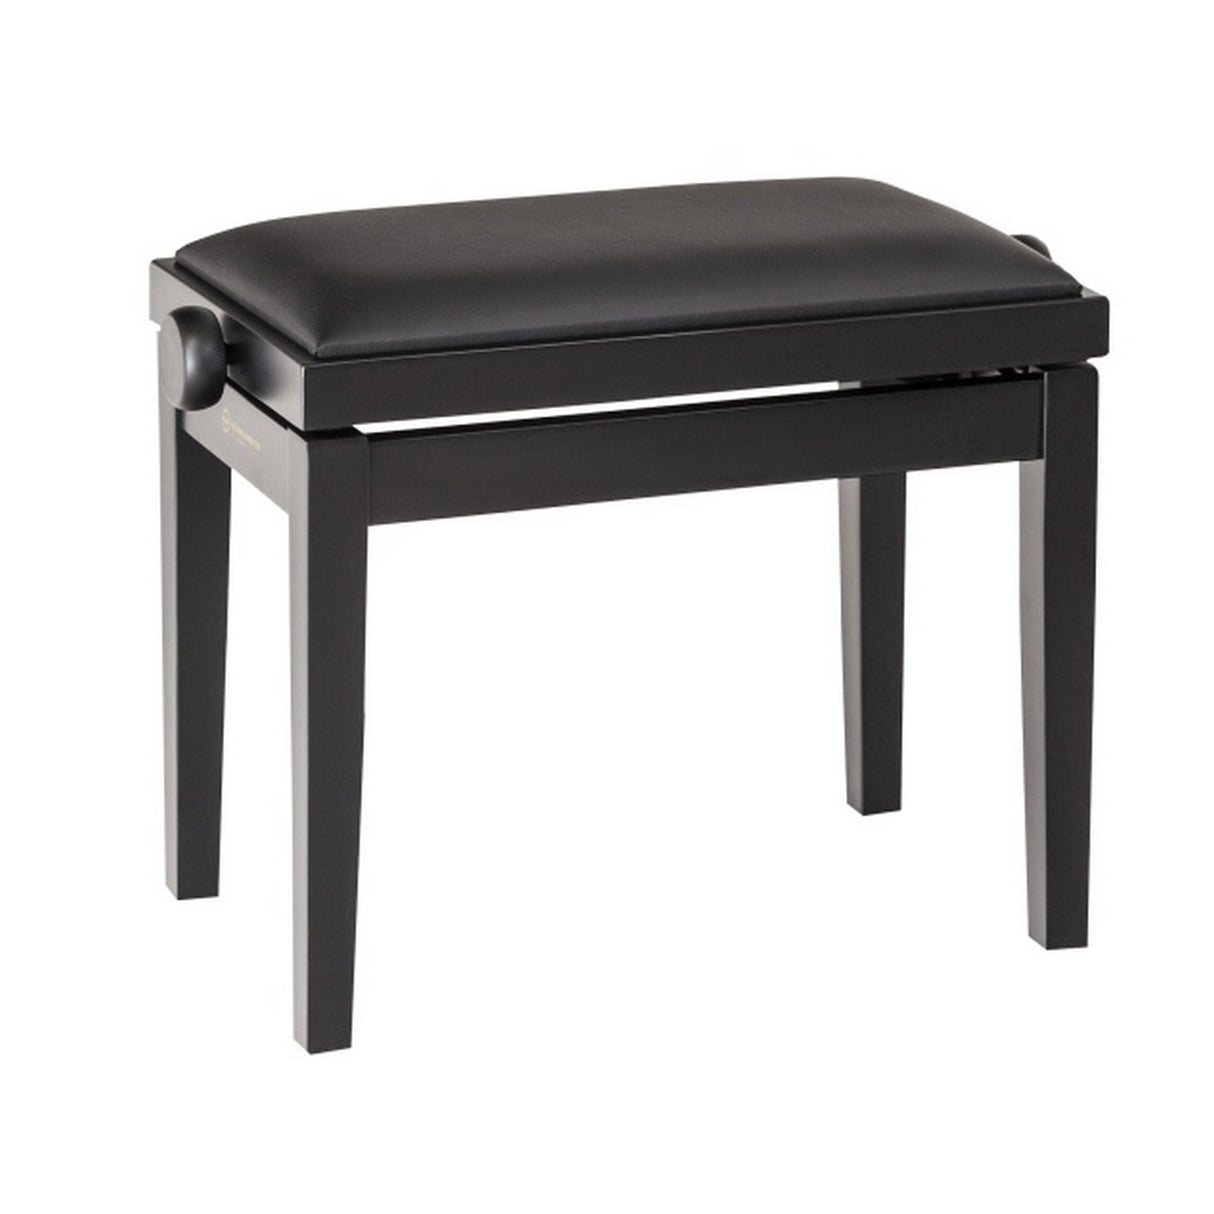 K&M 13910 Piano Bench, Black Matt Finish Bench, Black Imitation Leather Seat